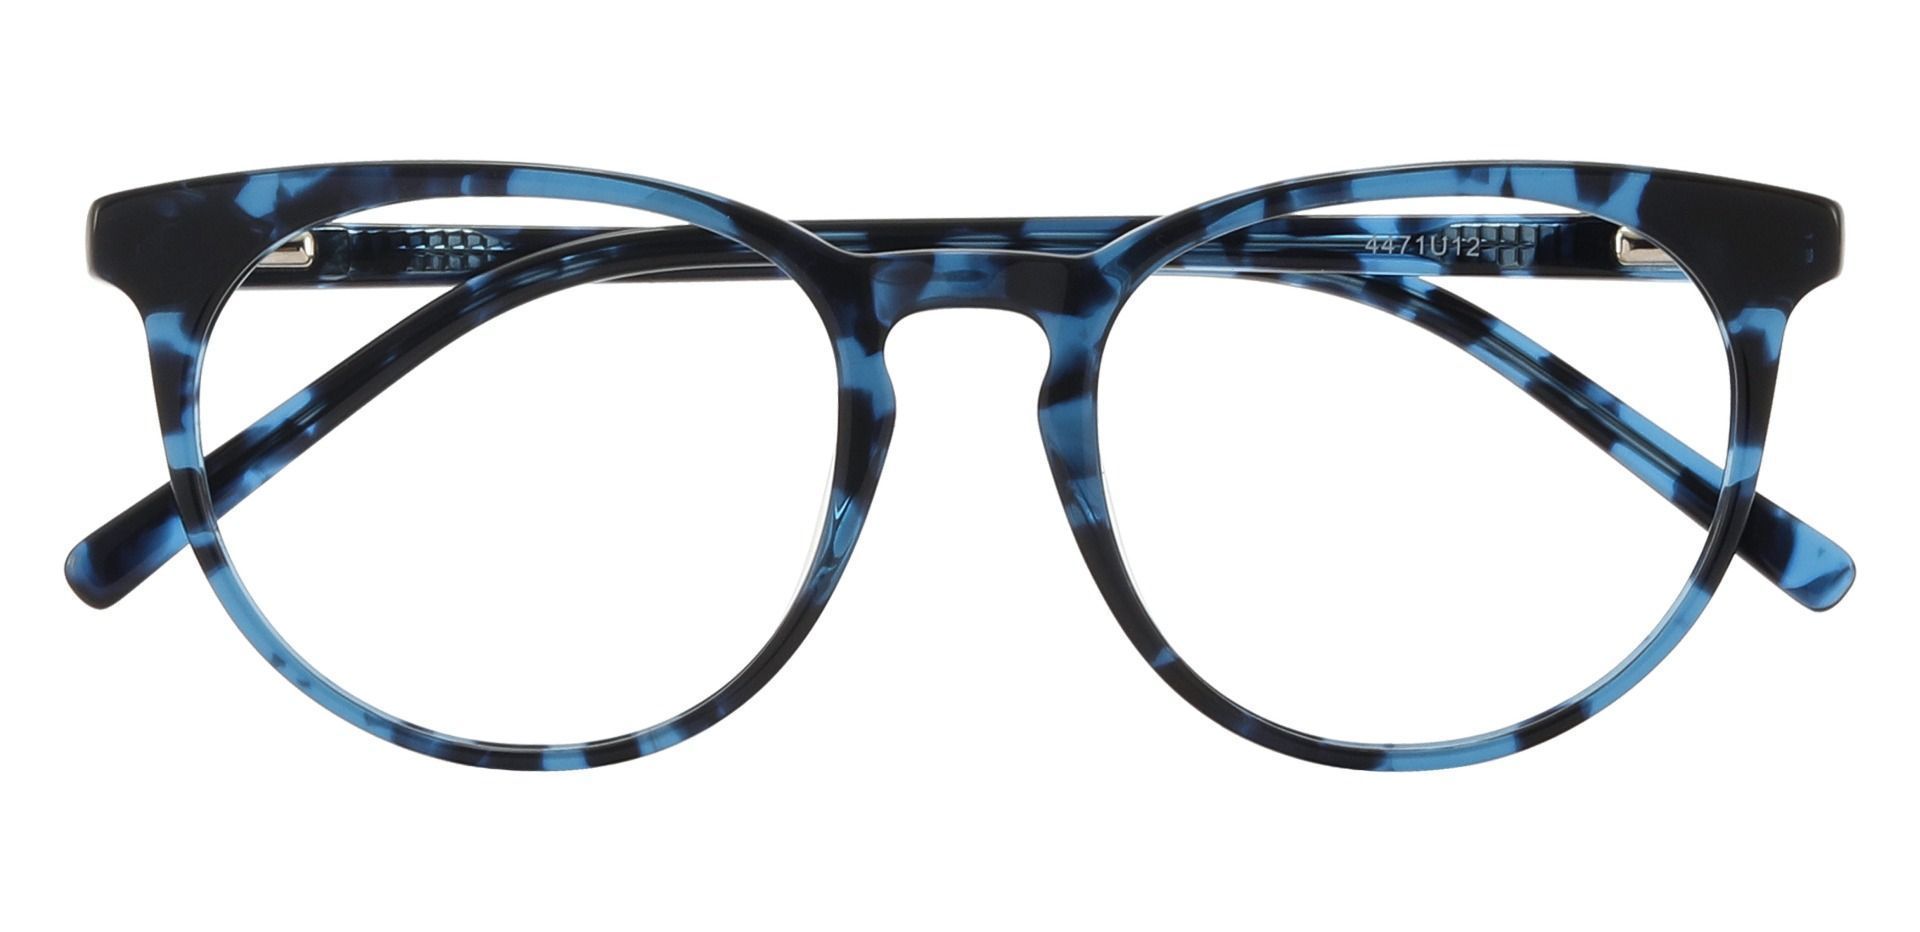 Tybee Oval Prescription Glasses - Blue